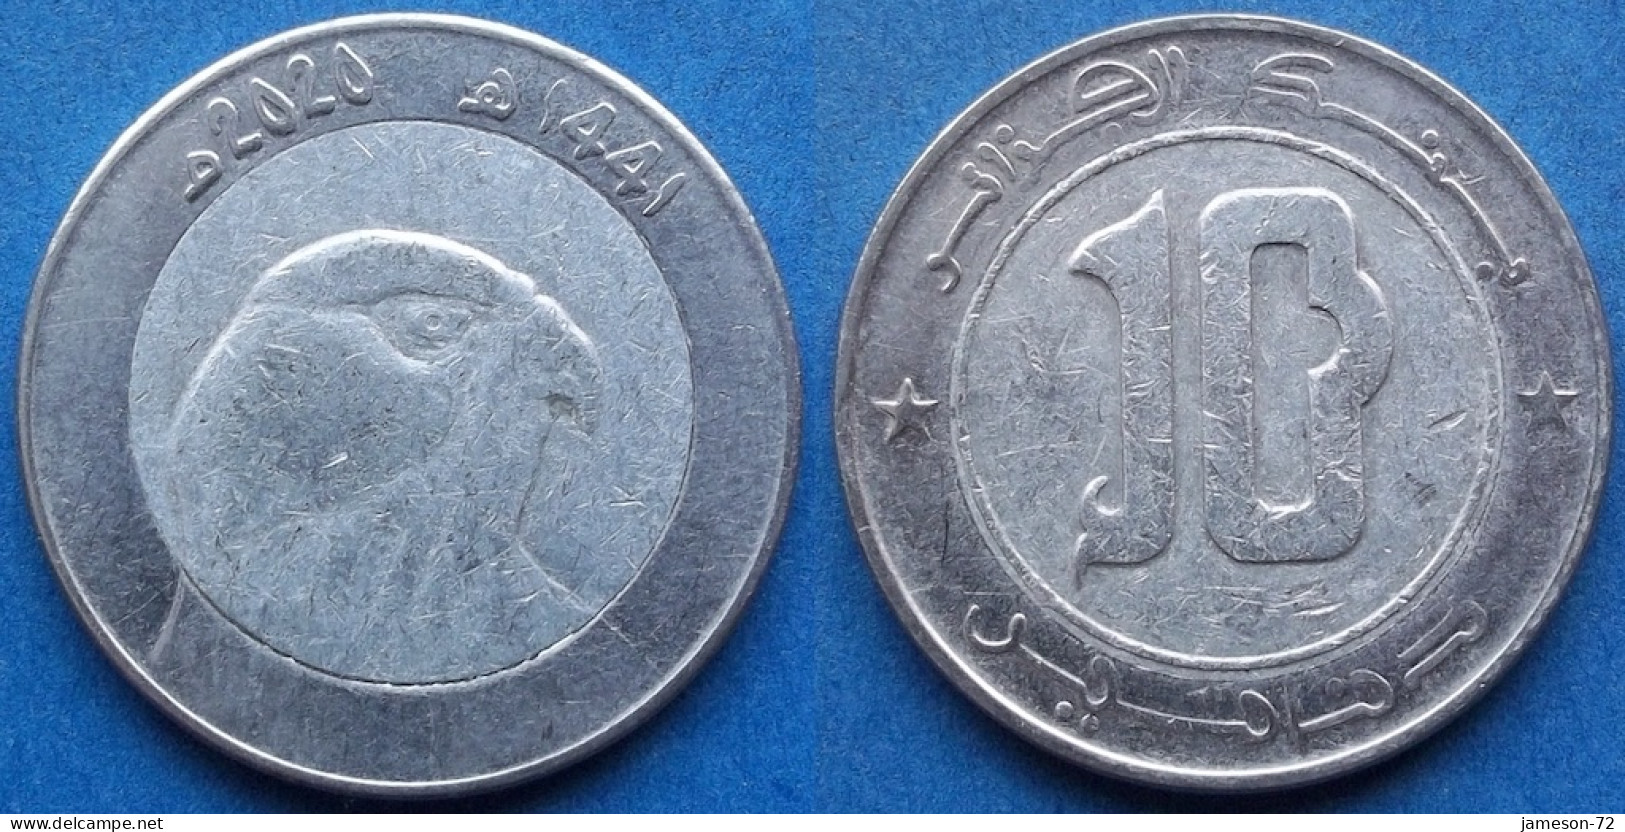 ALGERIA - 10 Dinars AH1441 2020AD "Barbary Falcon" KM# 124 Independent (1962) - Edelweiss Coins - Algeria